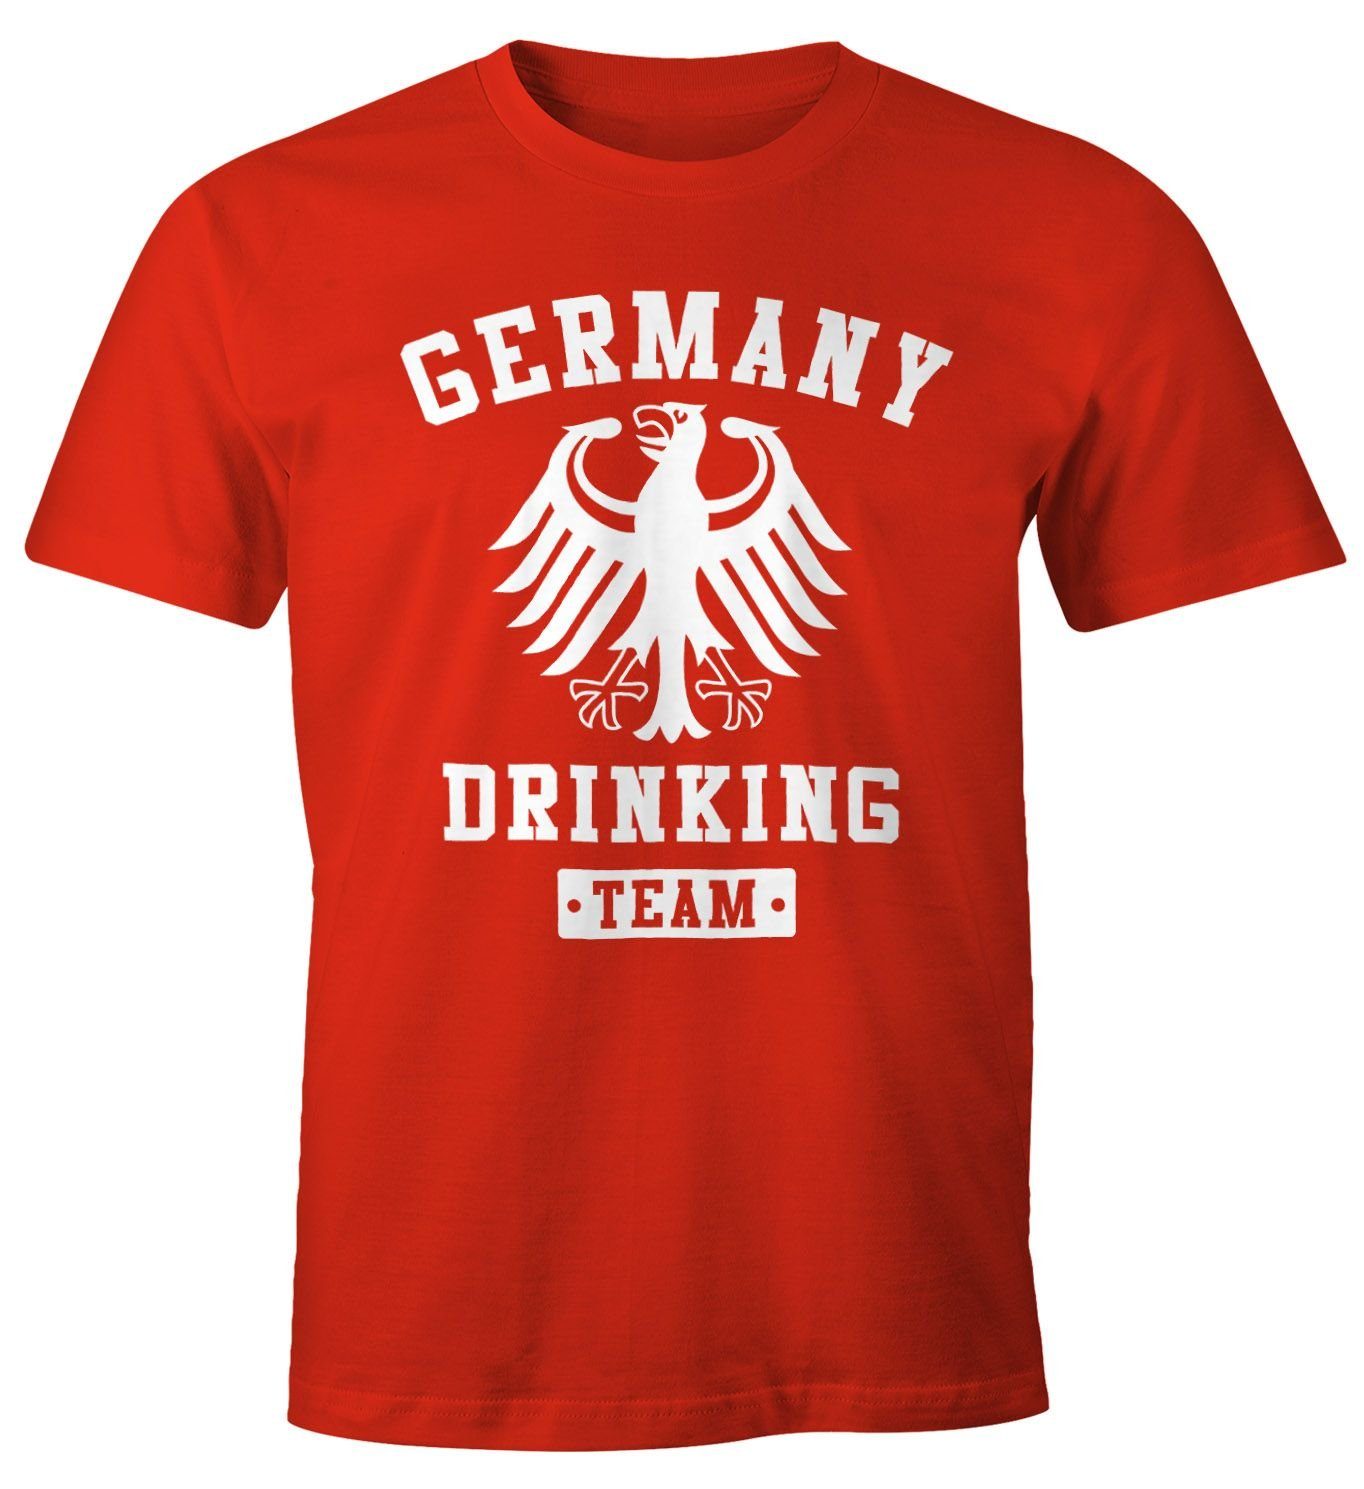 MoonWorks Print-Shirt Deutschland Herren T-Shirt Germany Drinking Team Bier Adler Fun-Shirt Moonworks® mit Print rot | T-Shirts